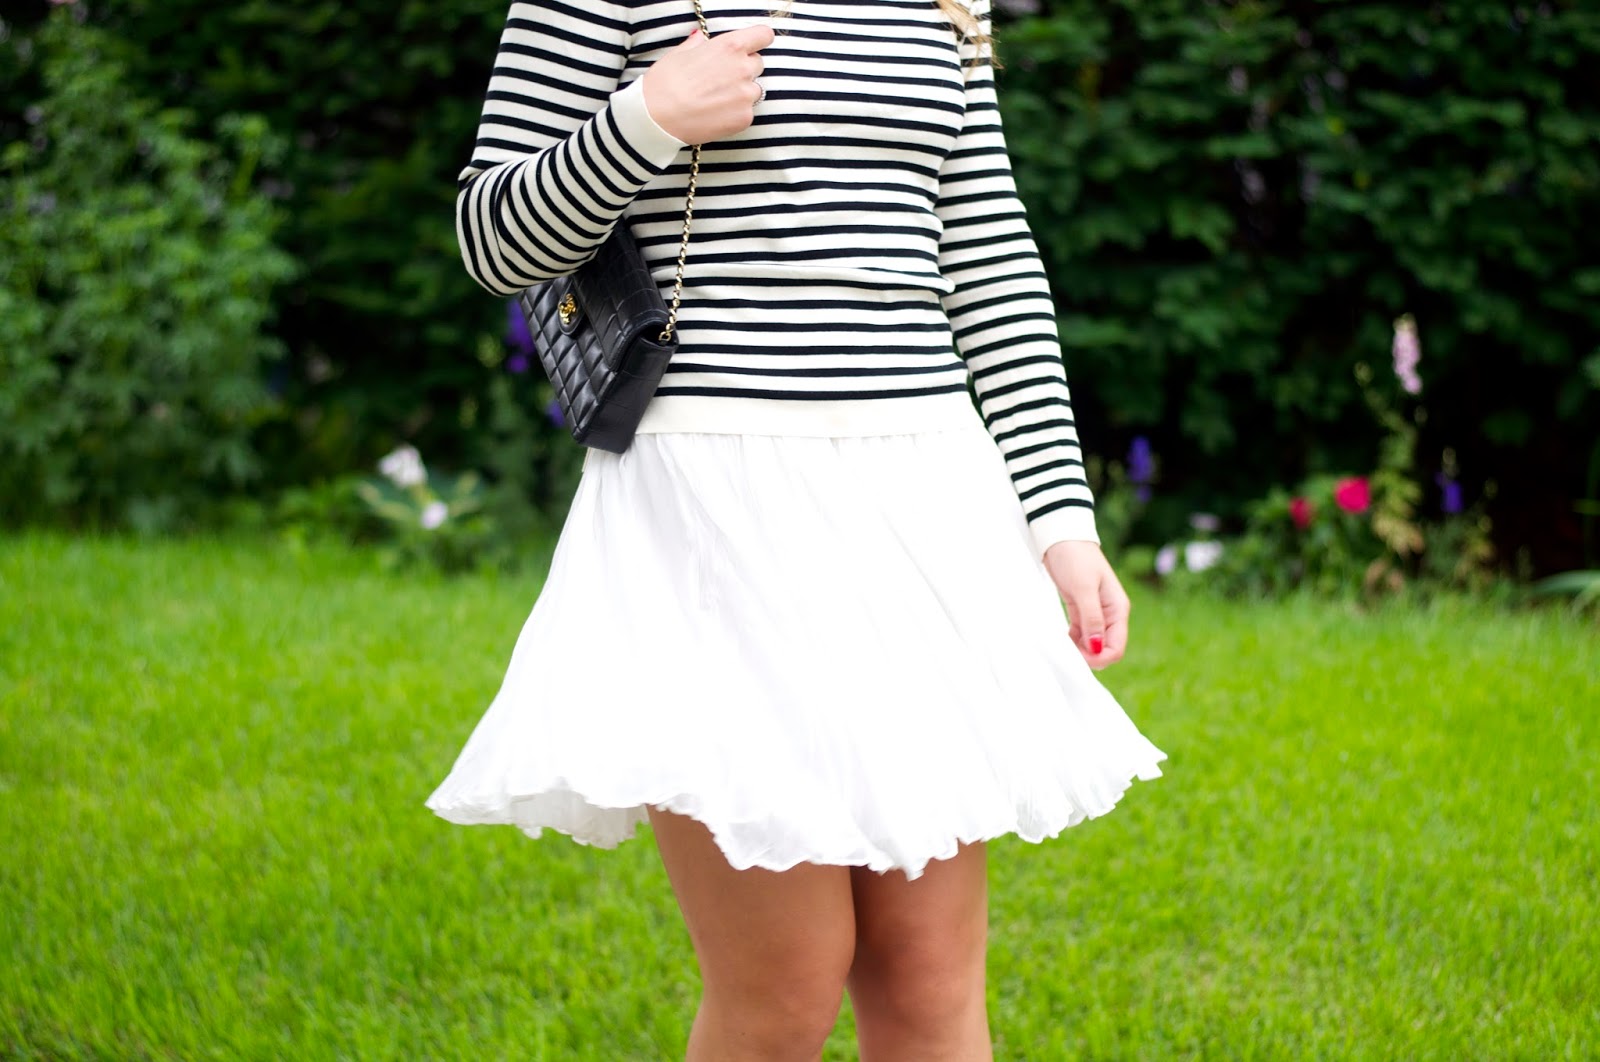 Summer Wind: Stripes + Breezy Skirt